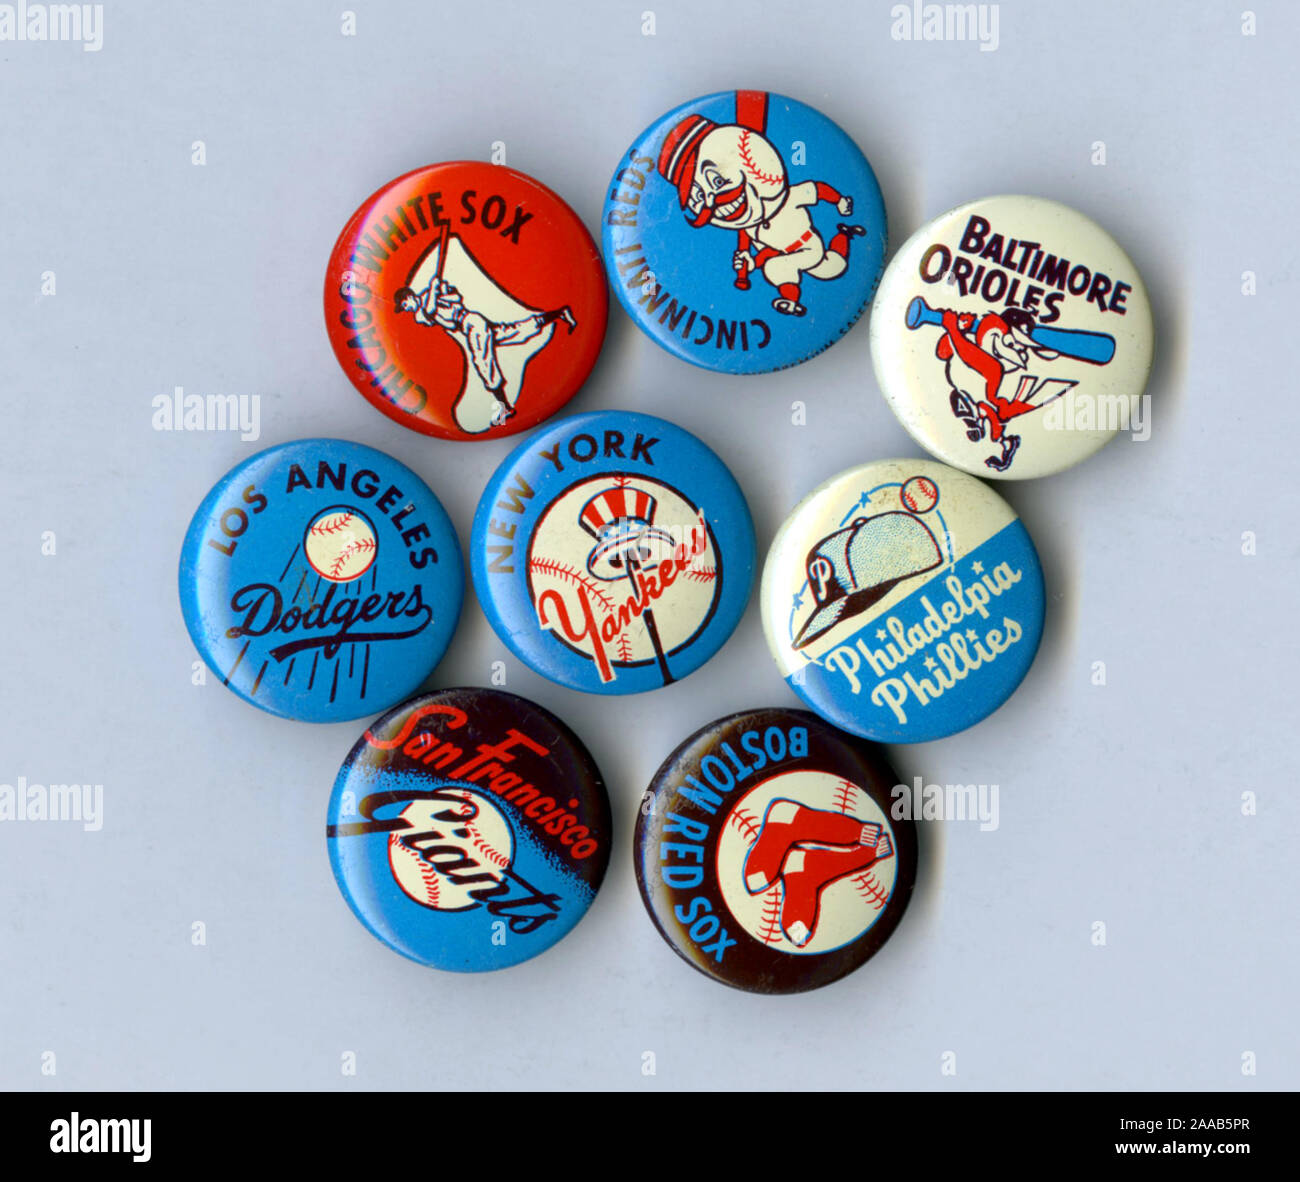 Small collectible souvenir buttons depicting logos of Major League Baseball teams at they app[eared in the 1950's-60's era. Stock Photo